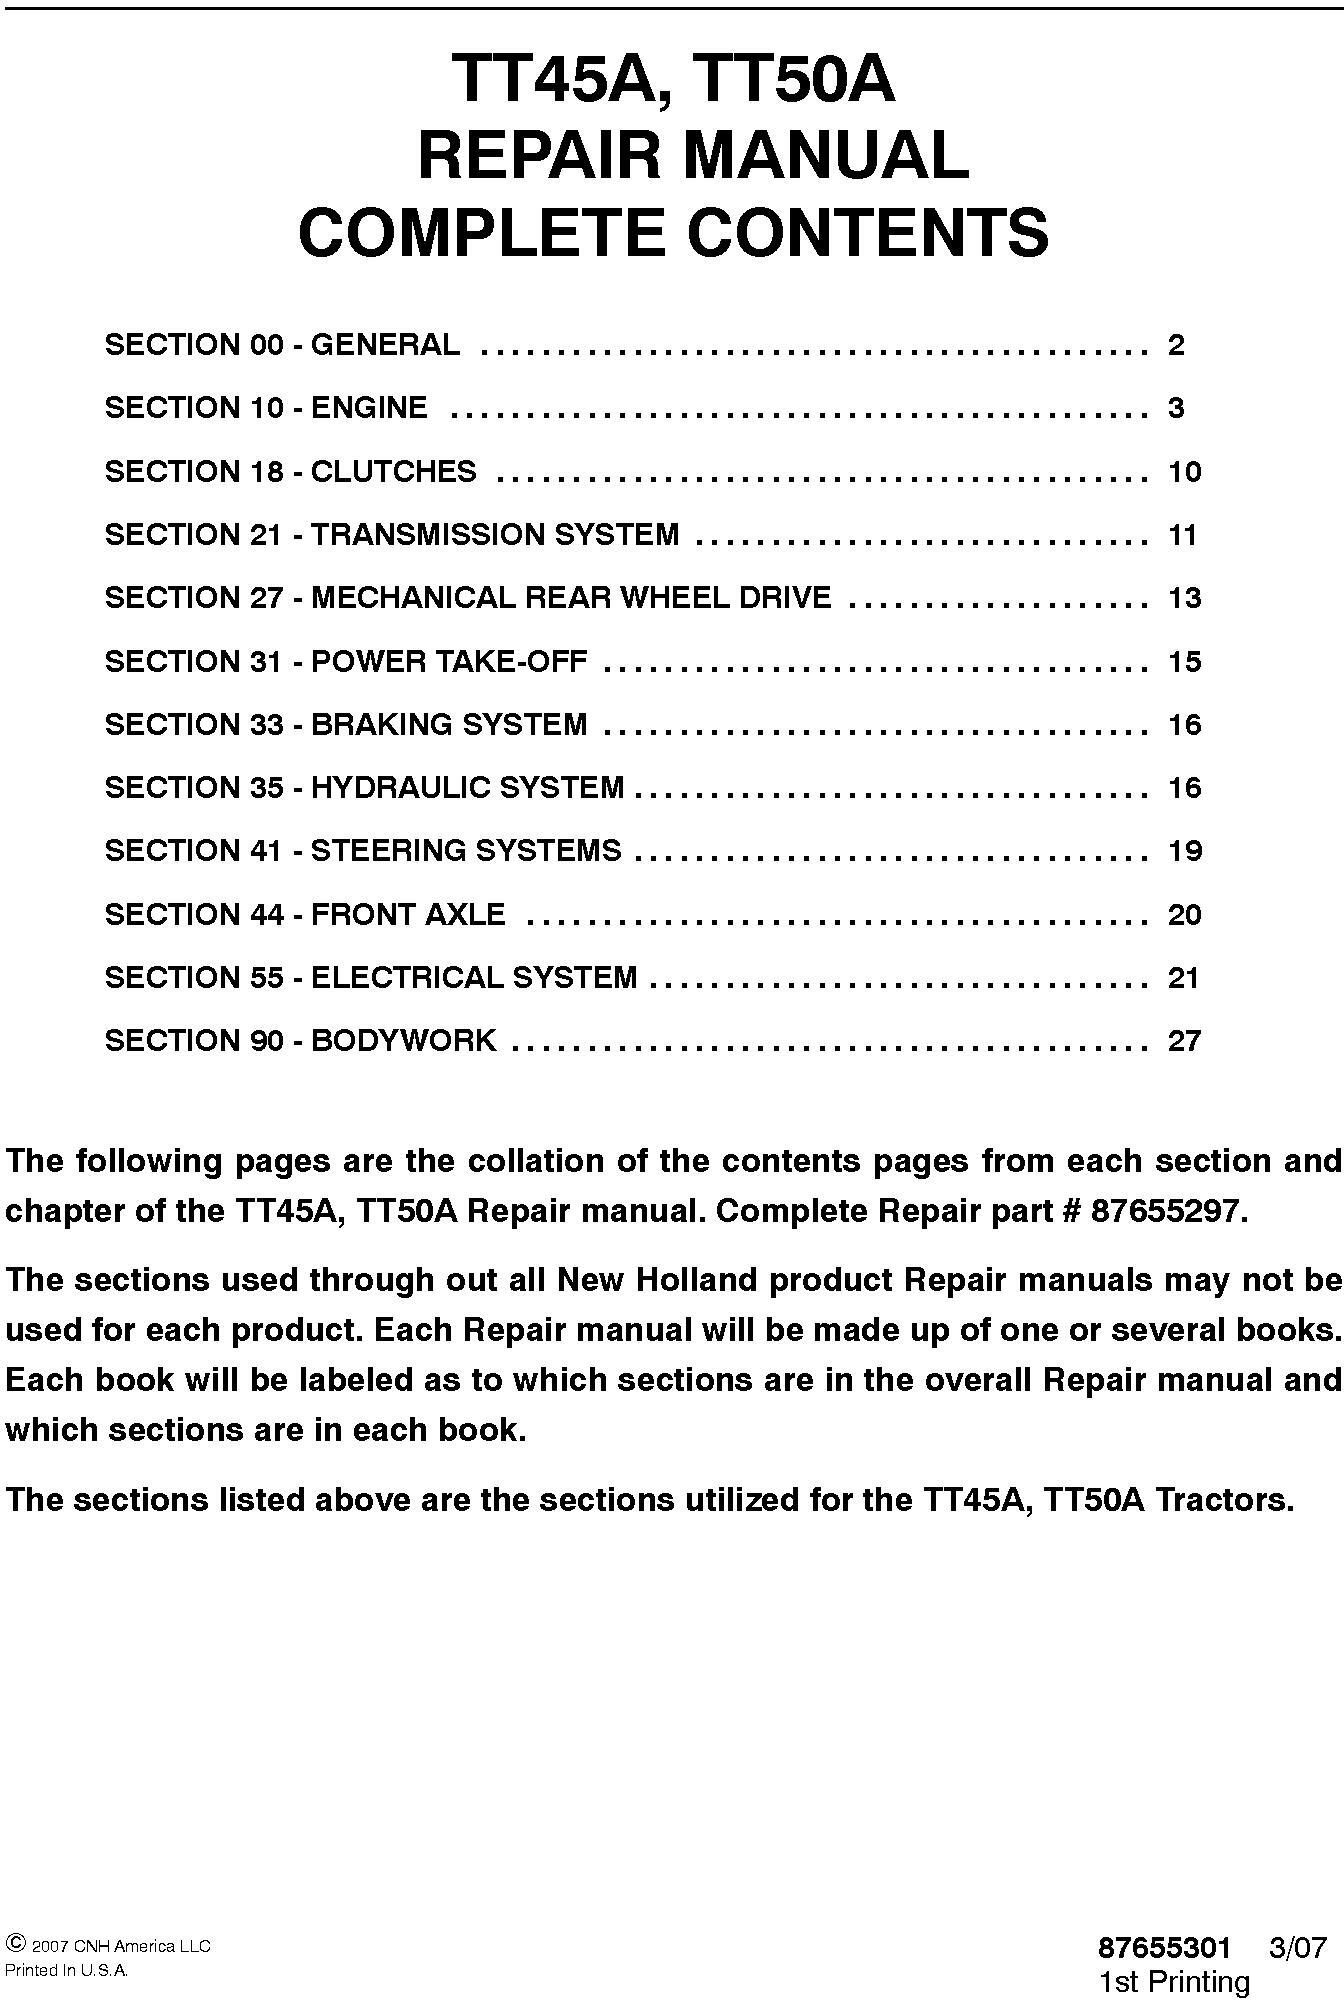 New Holland TT45A, TT50A Tractor Complete Service Manual - 19626